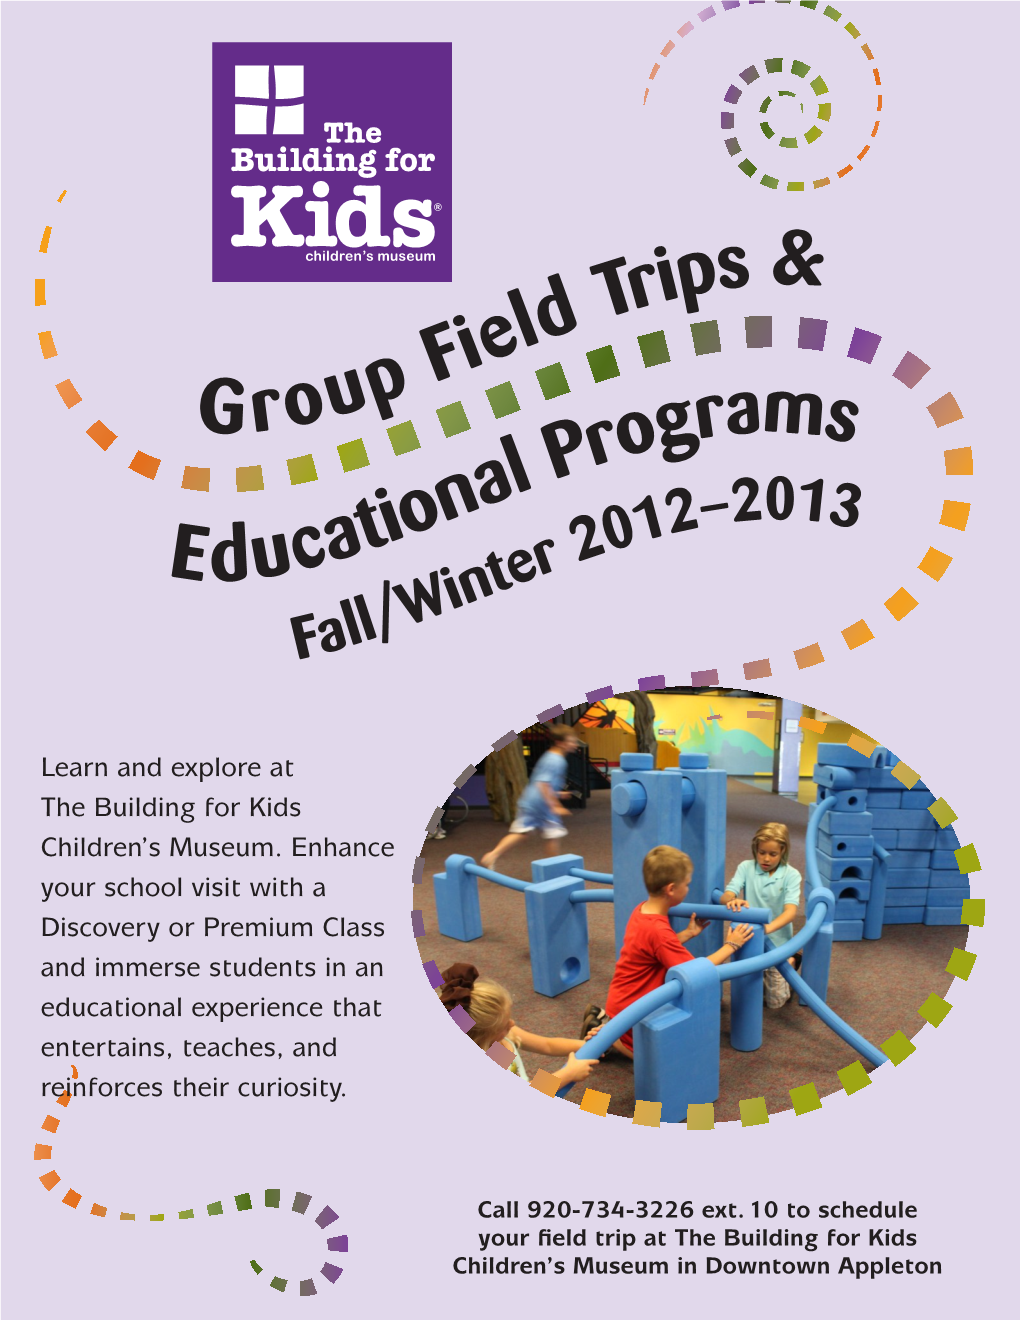 Group Field Trips & Educational Programs